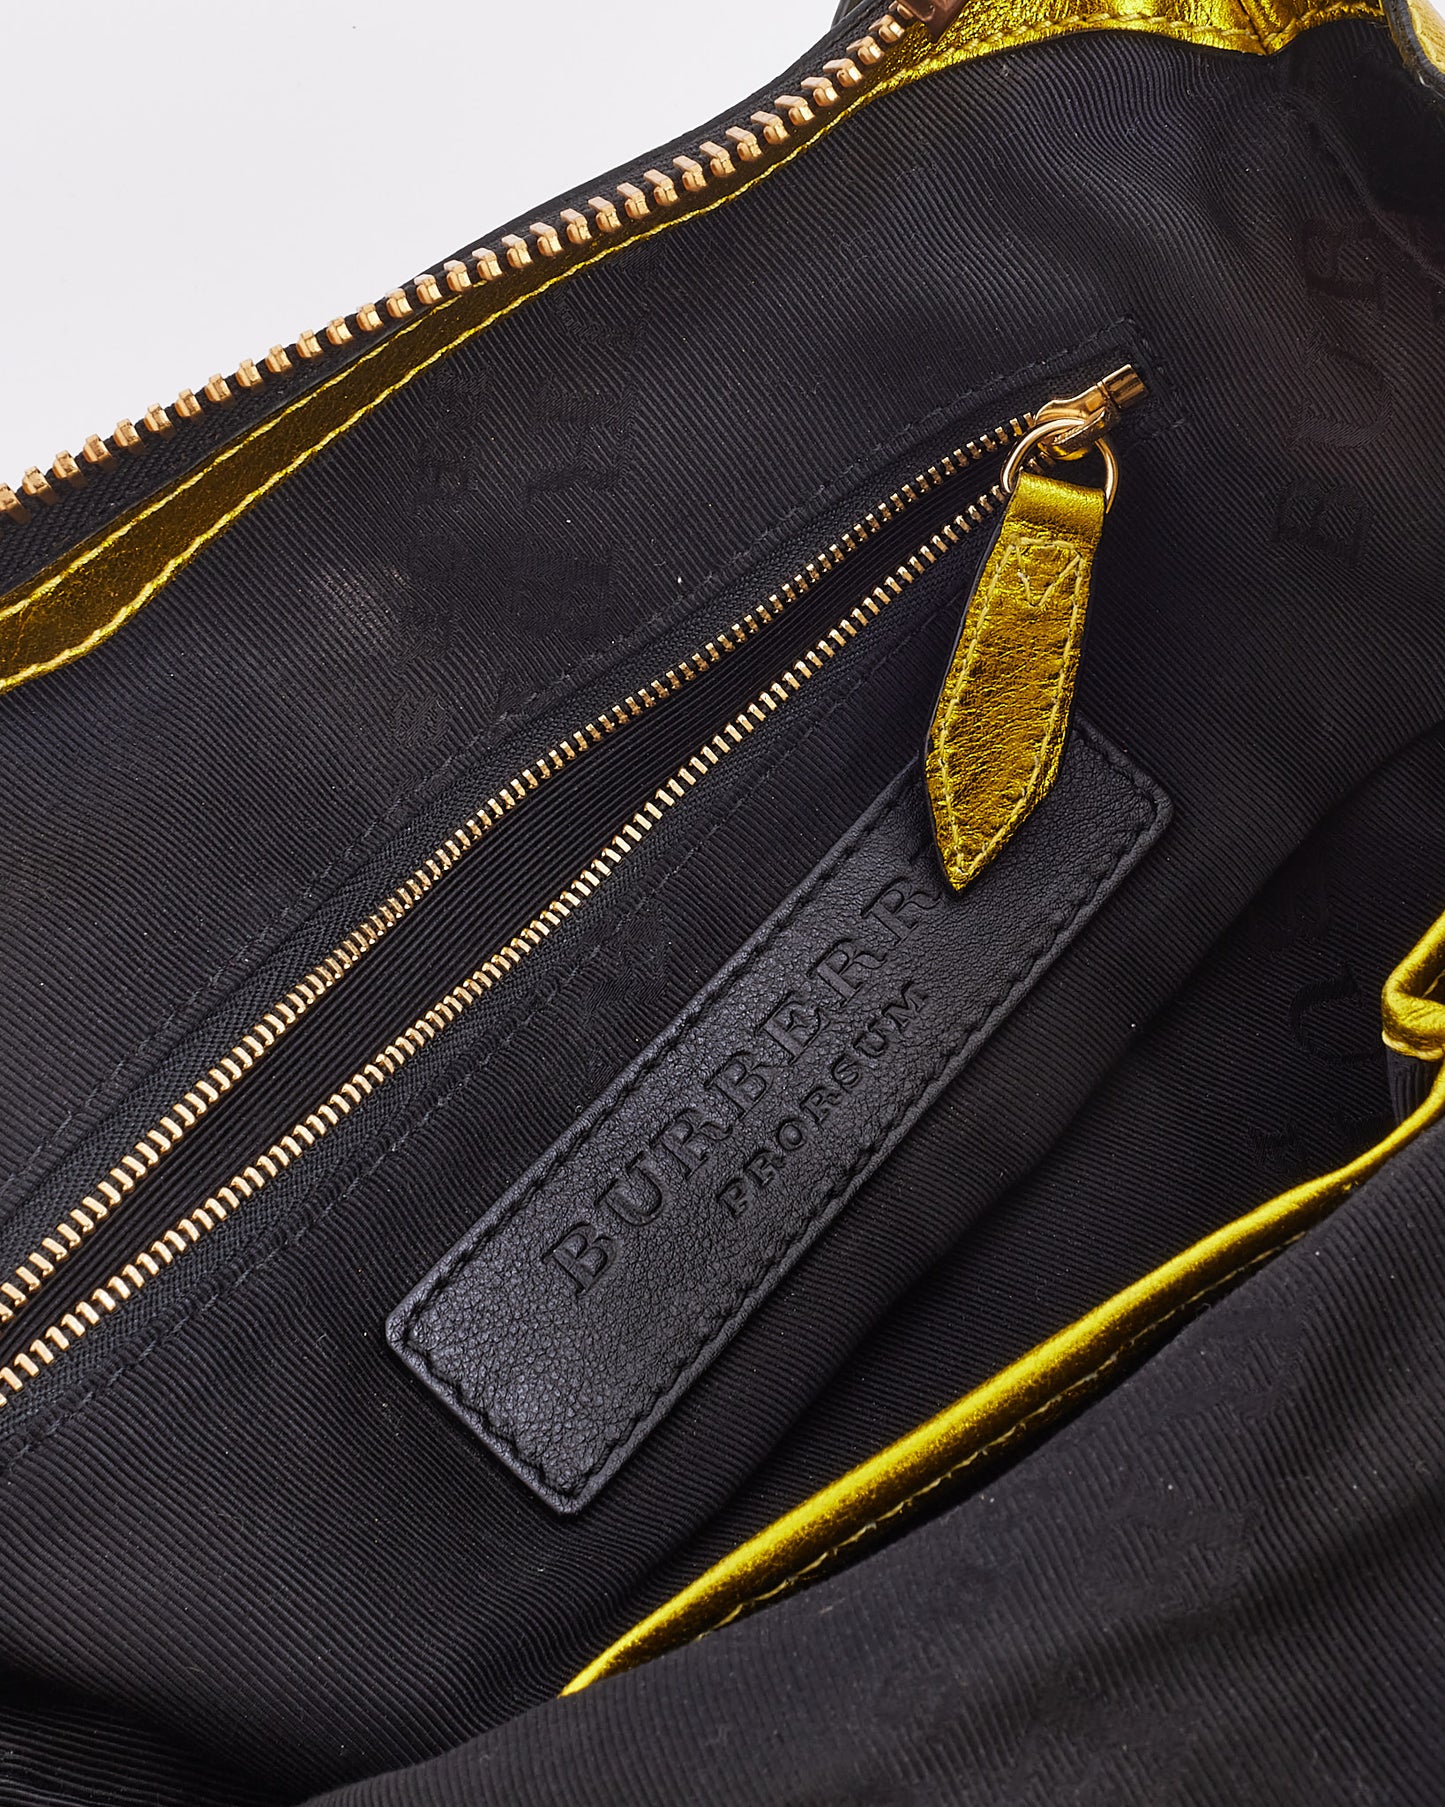 Burberry Metallic Yellow Grained Leather Prorsum Bag